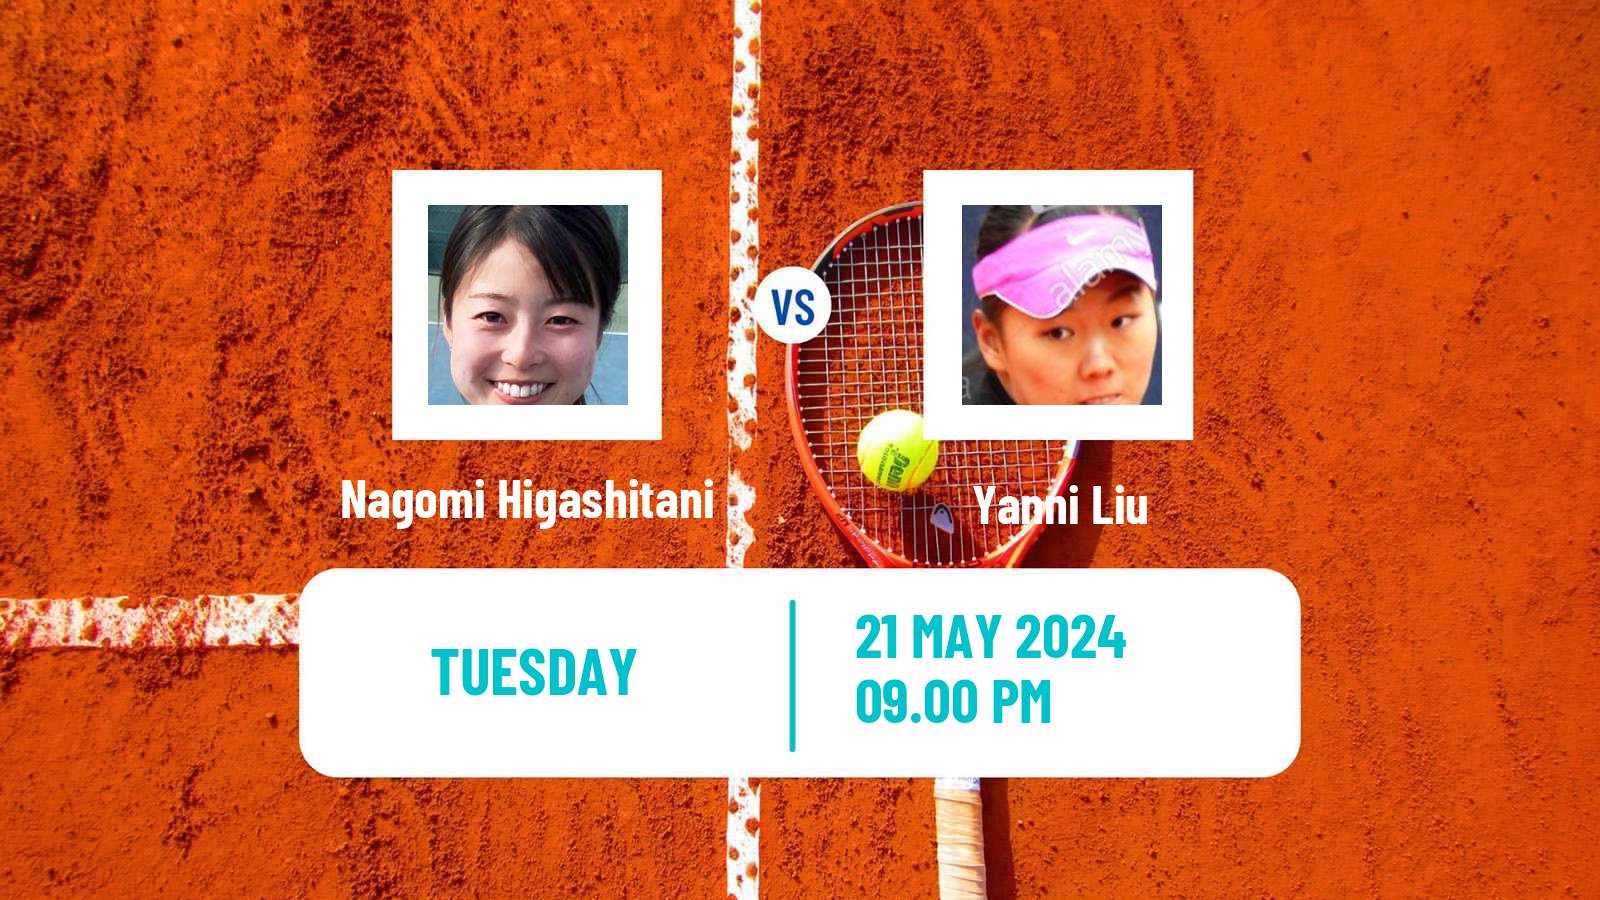 Tennis ITF W15 Fukui Women Nagomi Higashitani - Yanni Liu